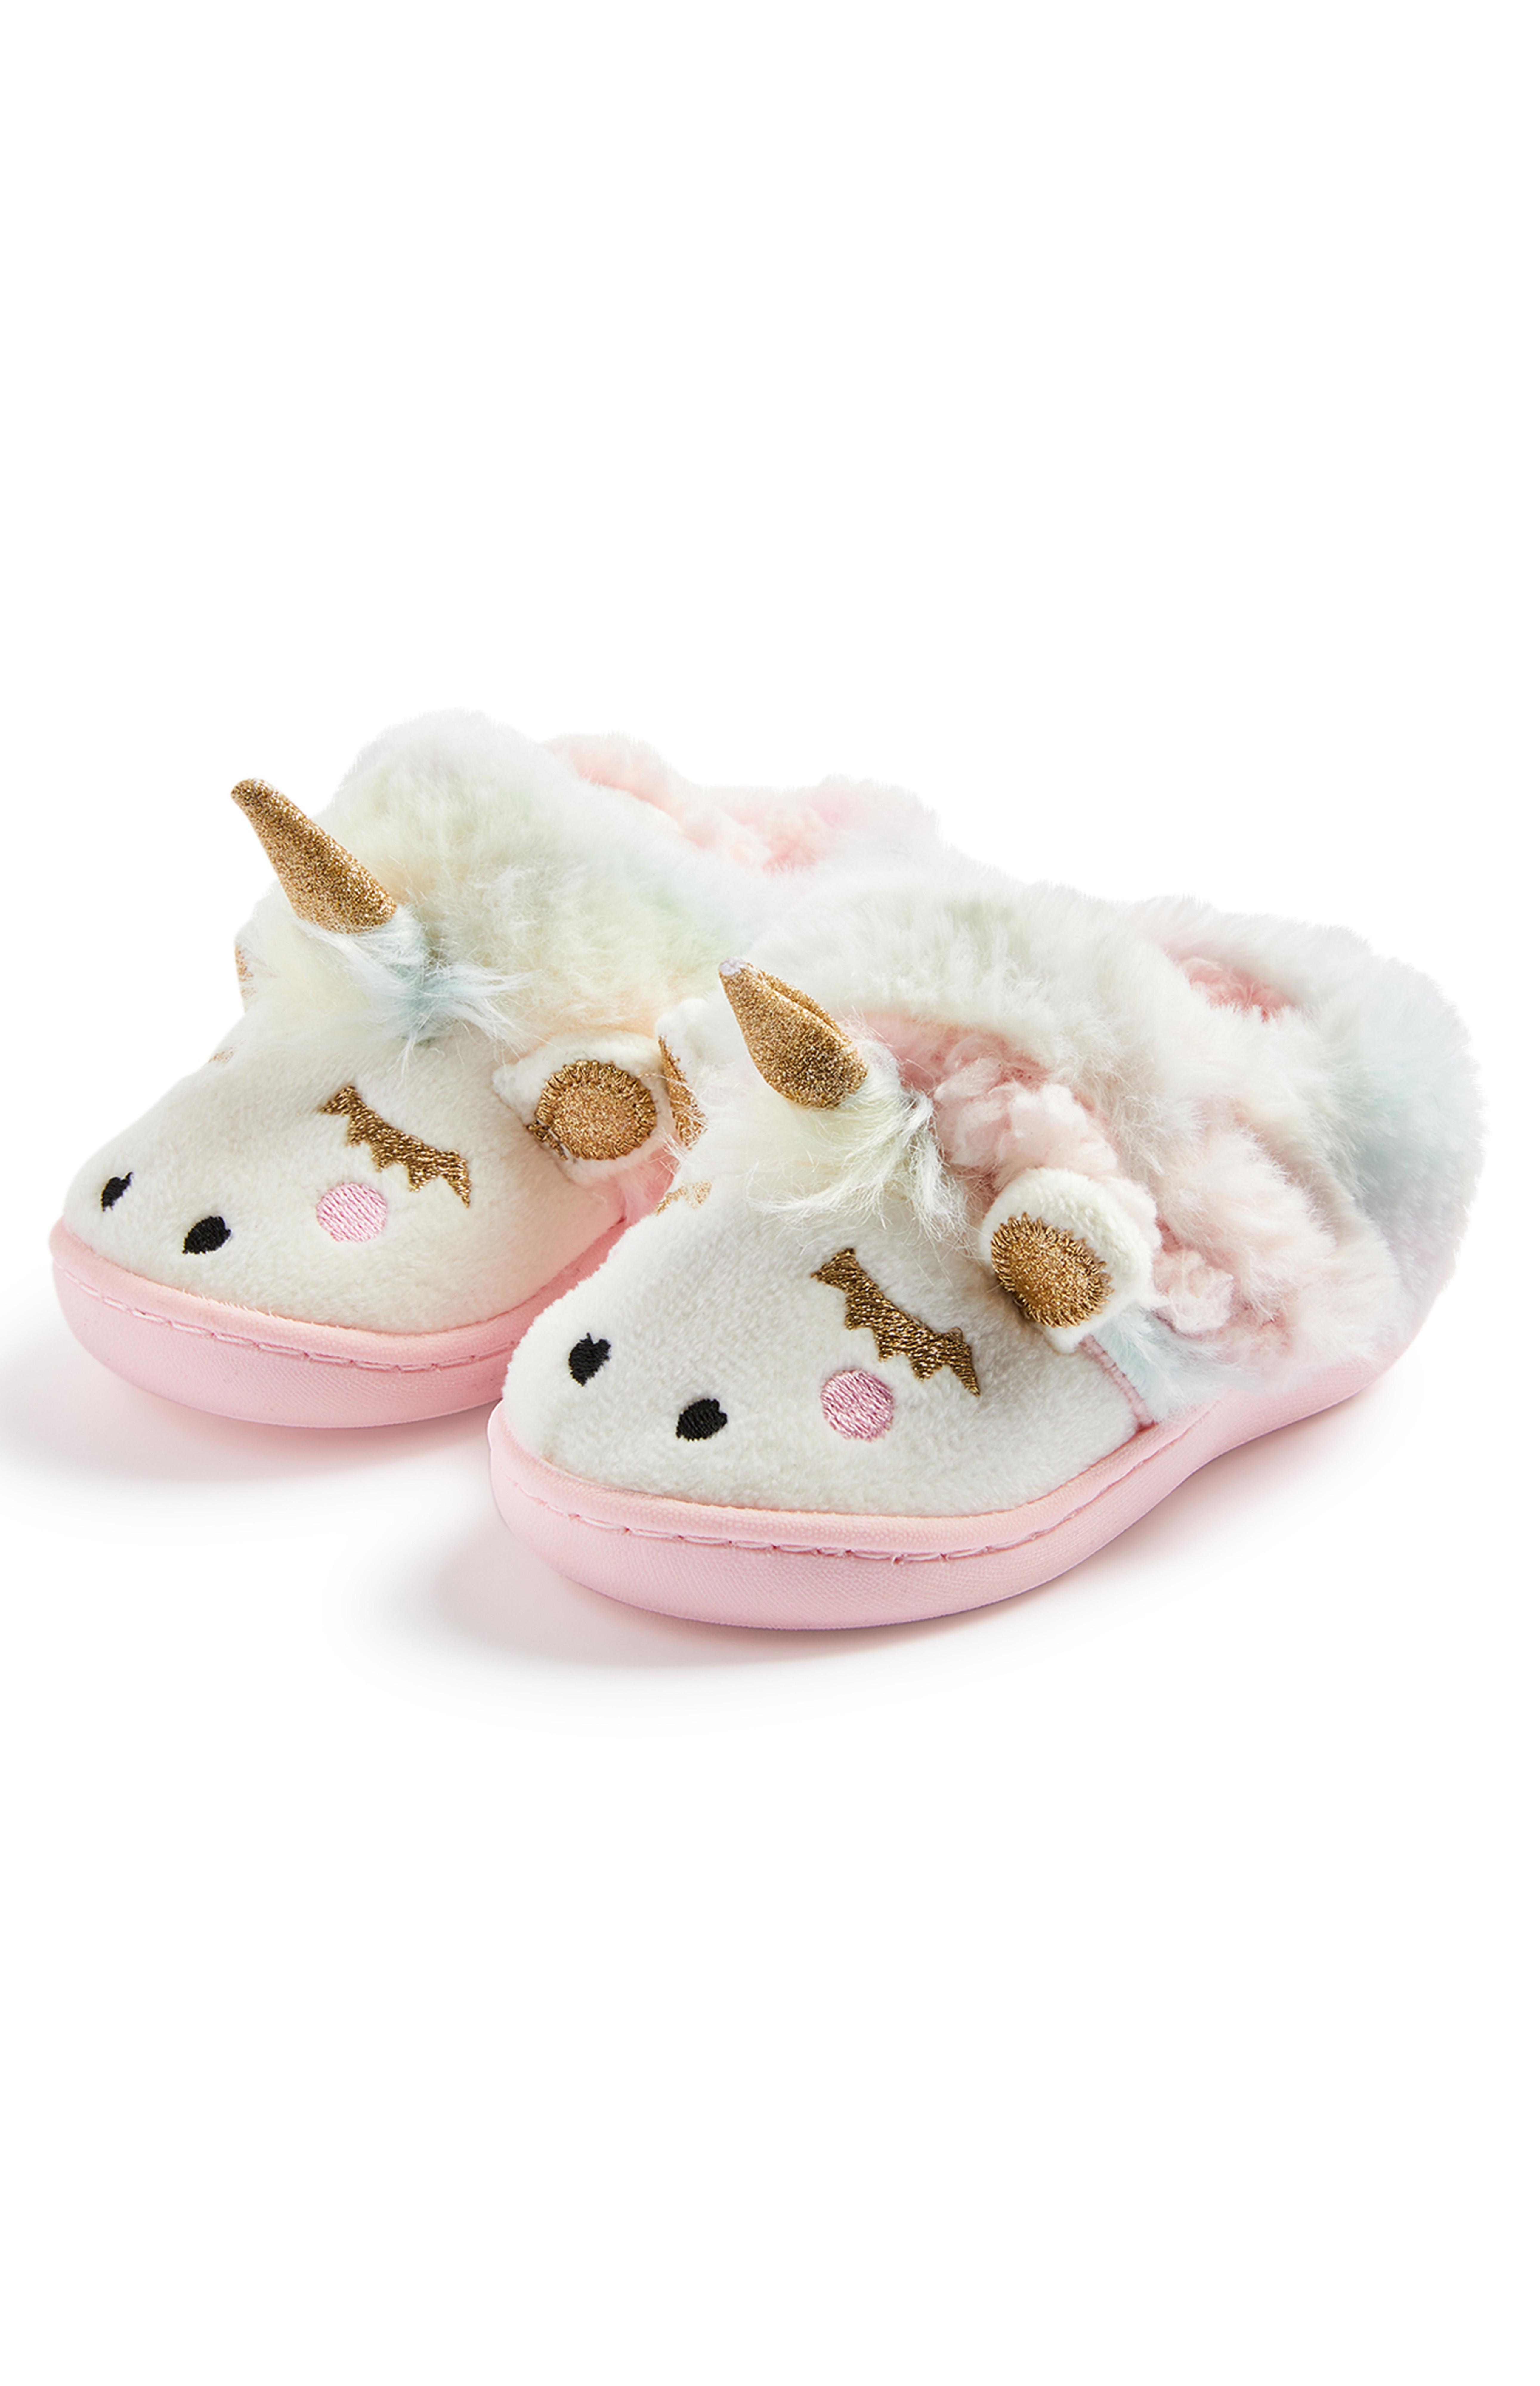 unicorn slippers primark